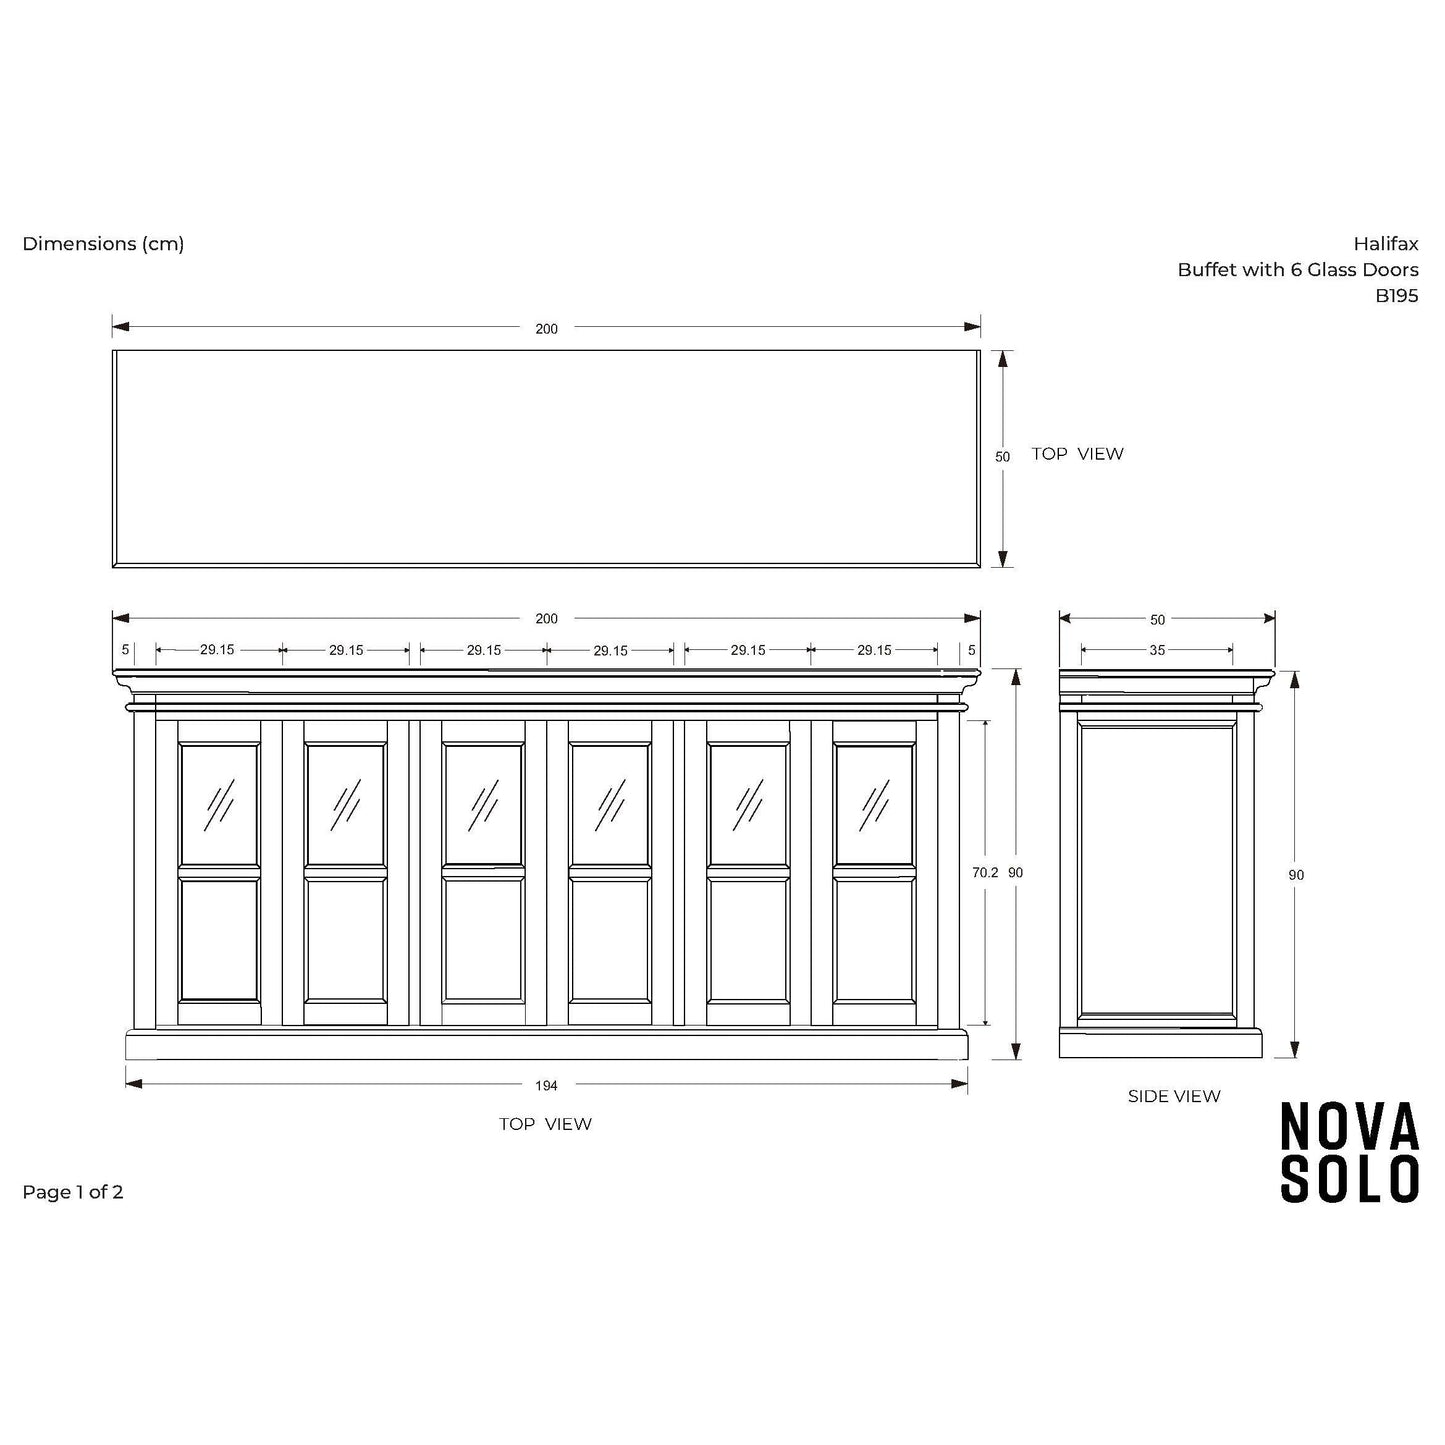 NovaSolo Halifax 79" Classic White Mahogany Buffet With 6 Glass Doors